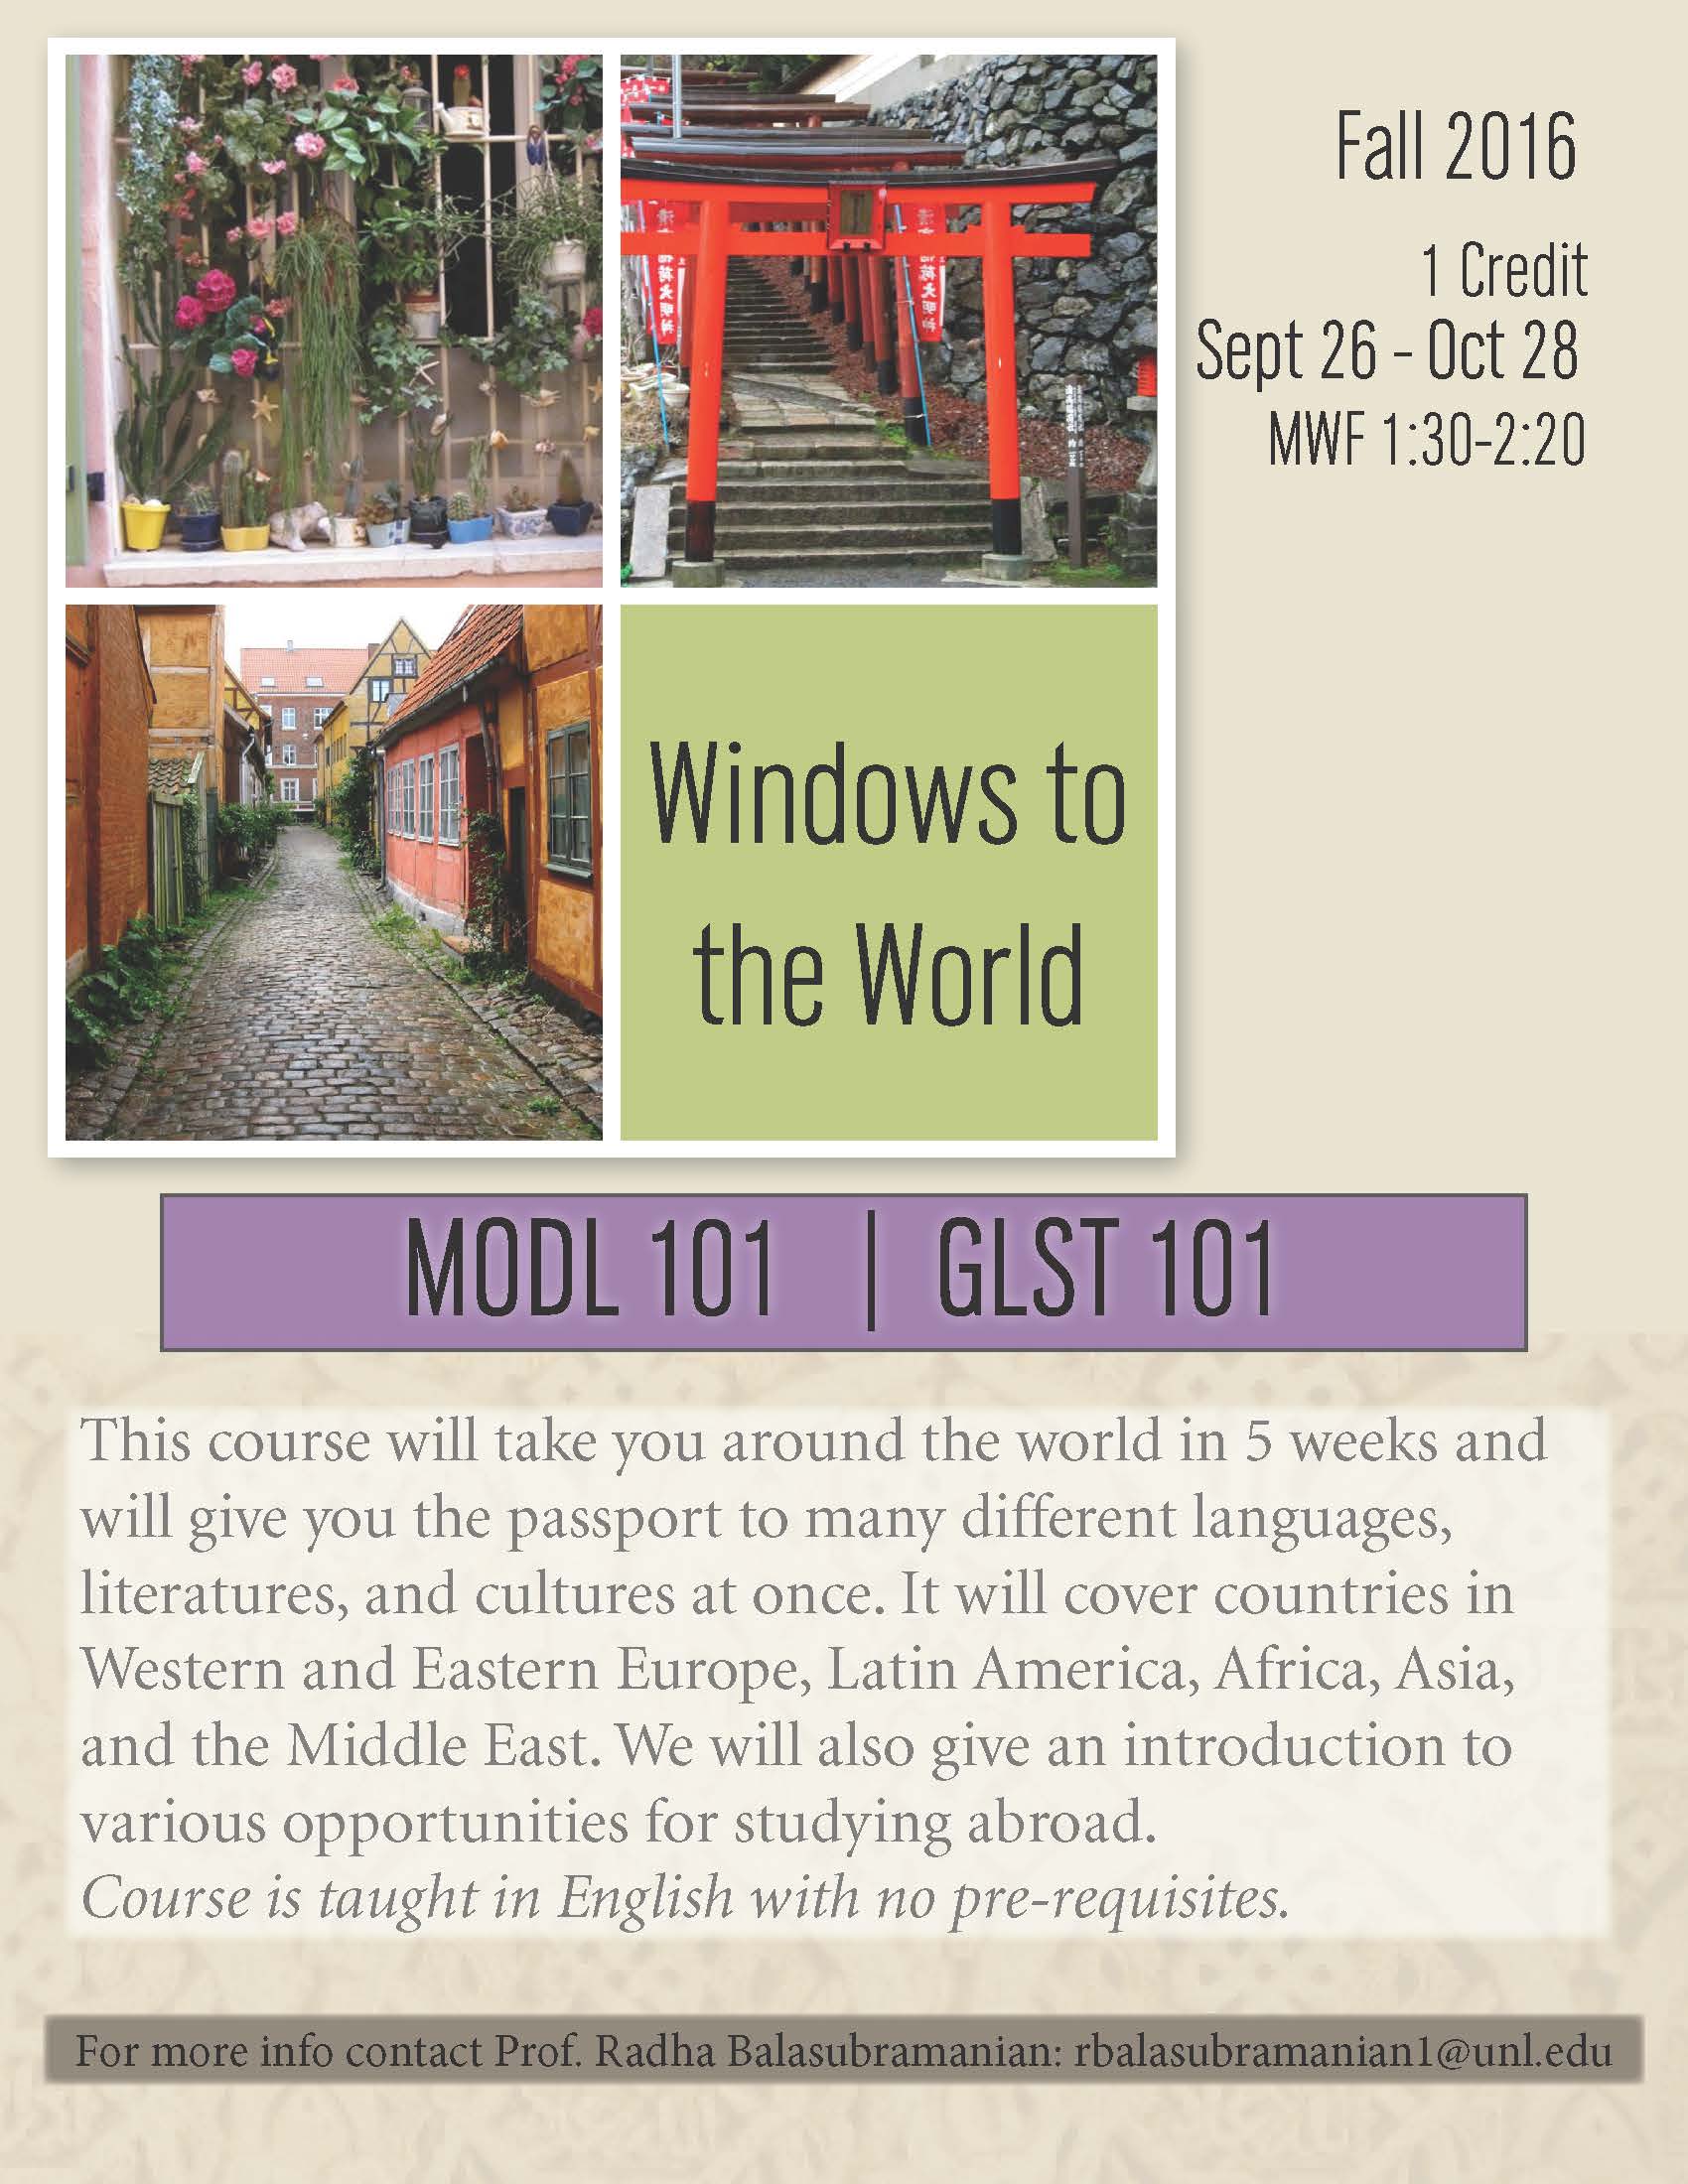 GLST 101: Windows to the World